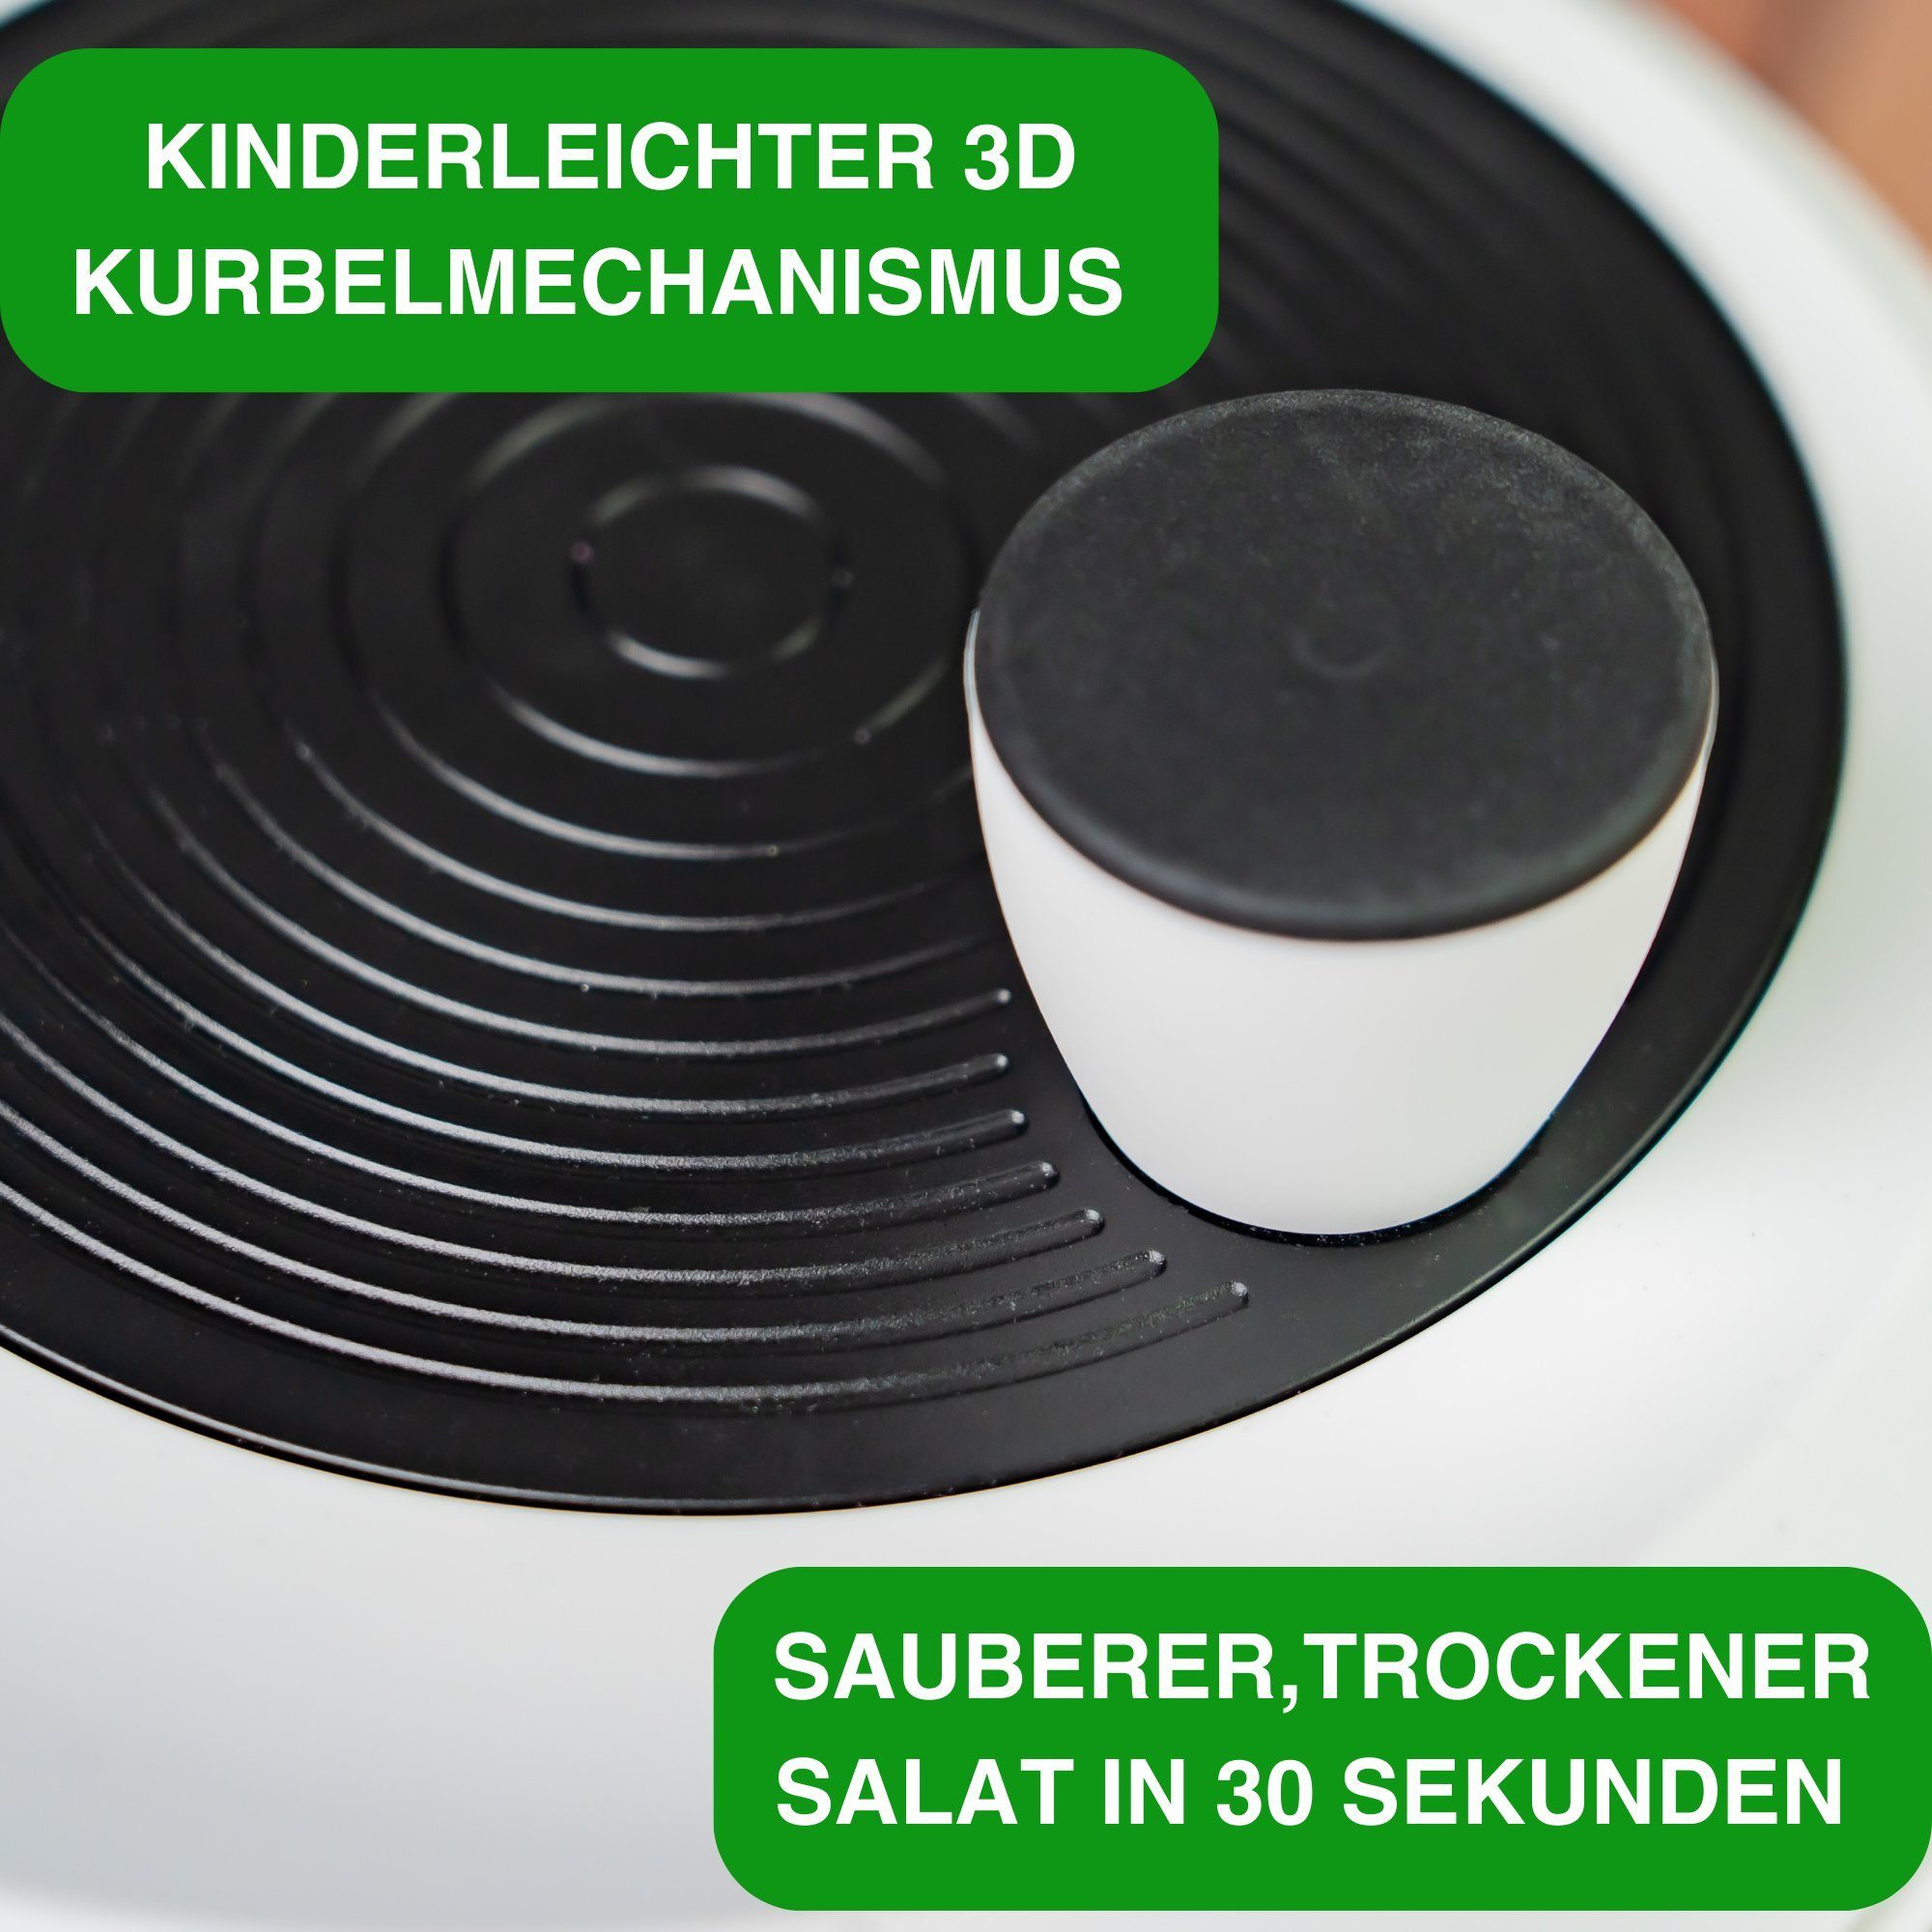 & Schleuder Salatschüssel, 3D Thiru Spülmaschinenfest, 4L Salatschleuder 4L Kurbel - - 2in1 Innovative rutschfeste